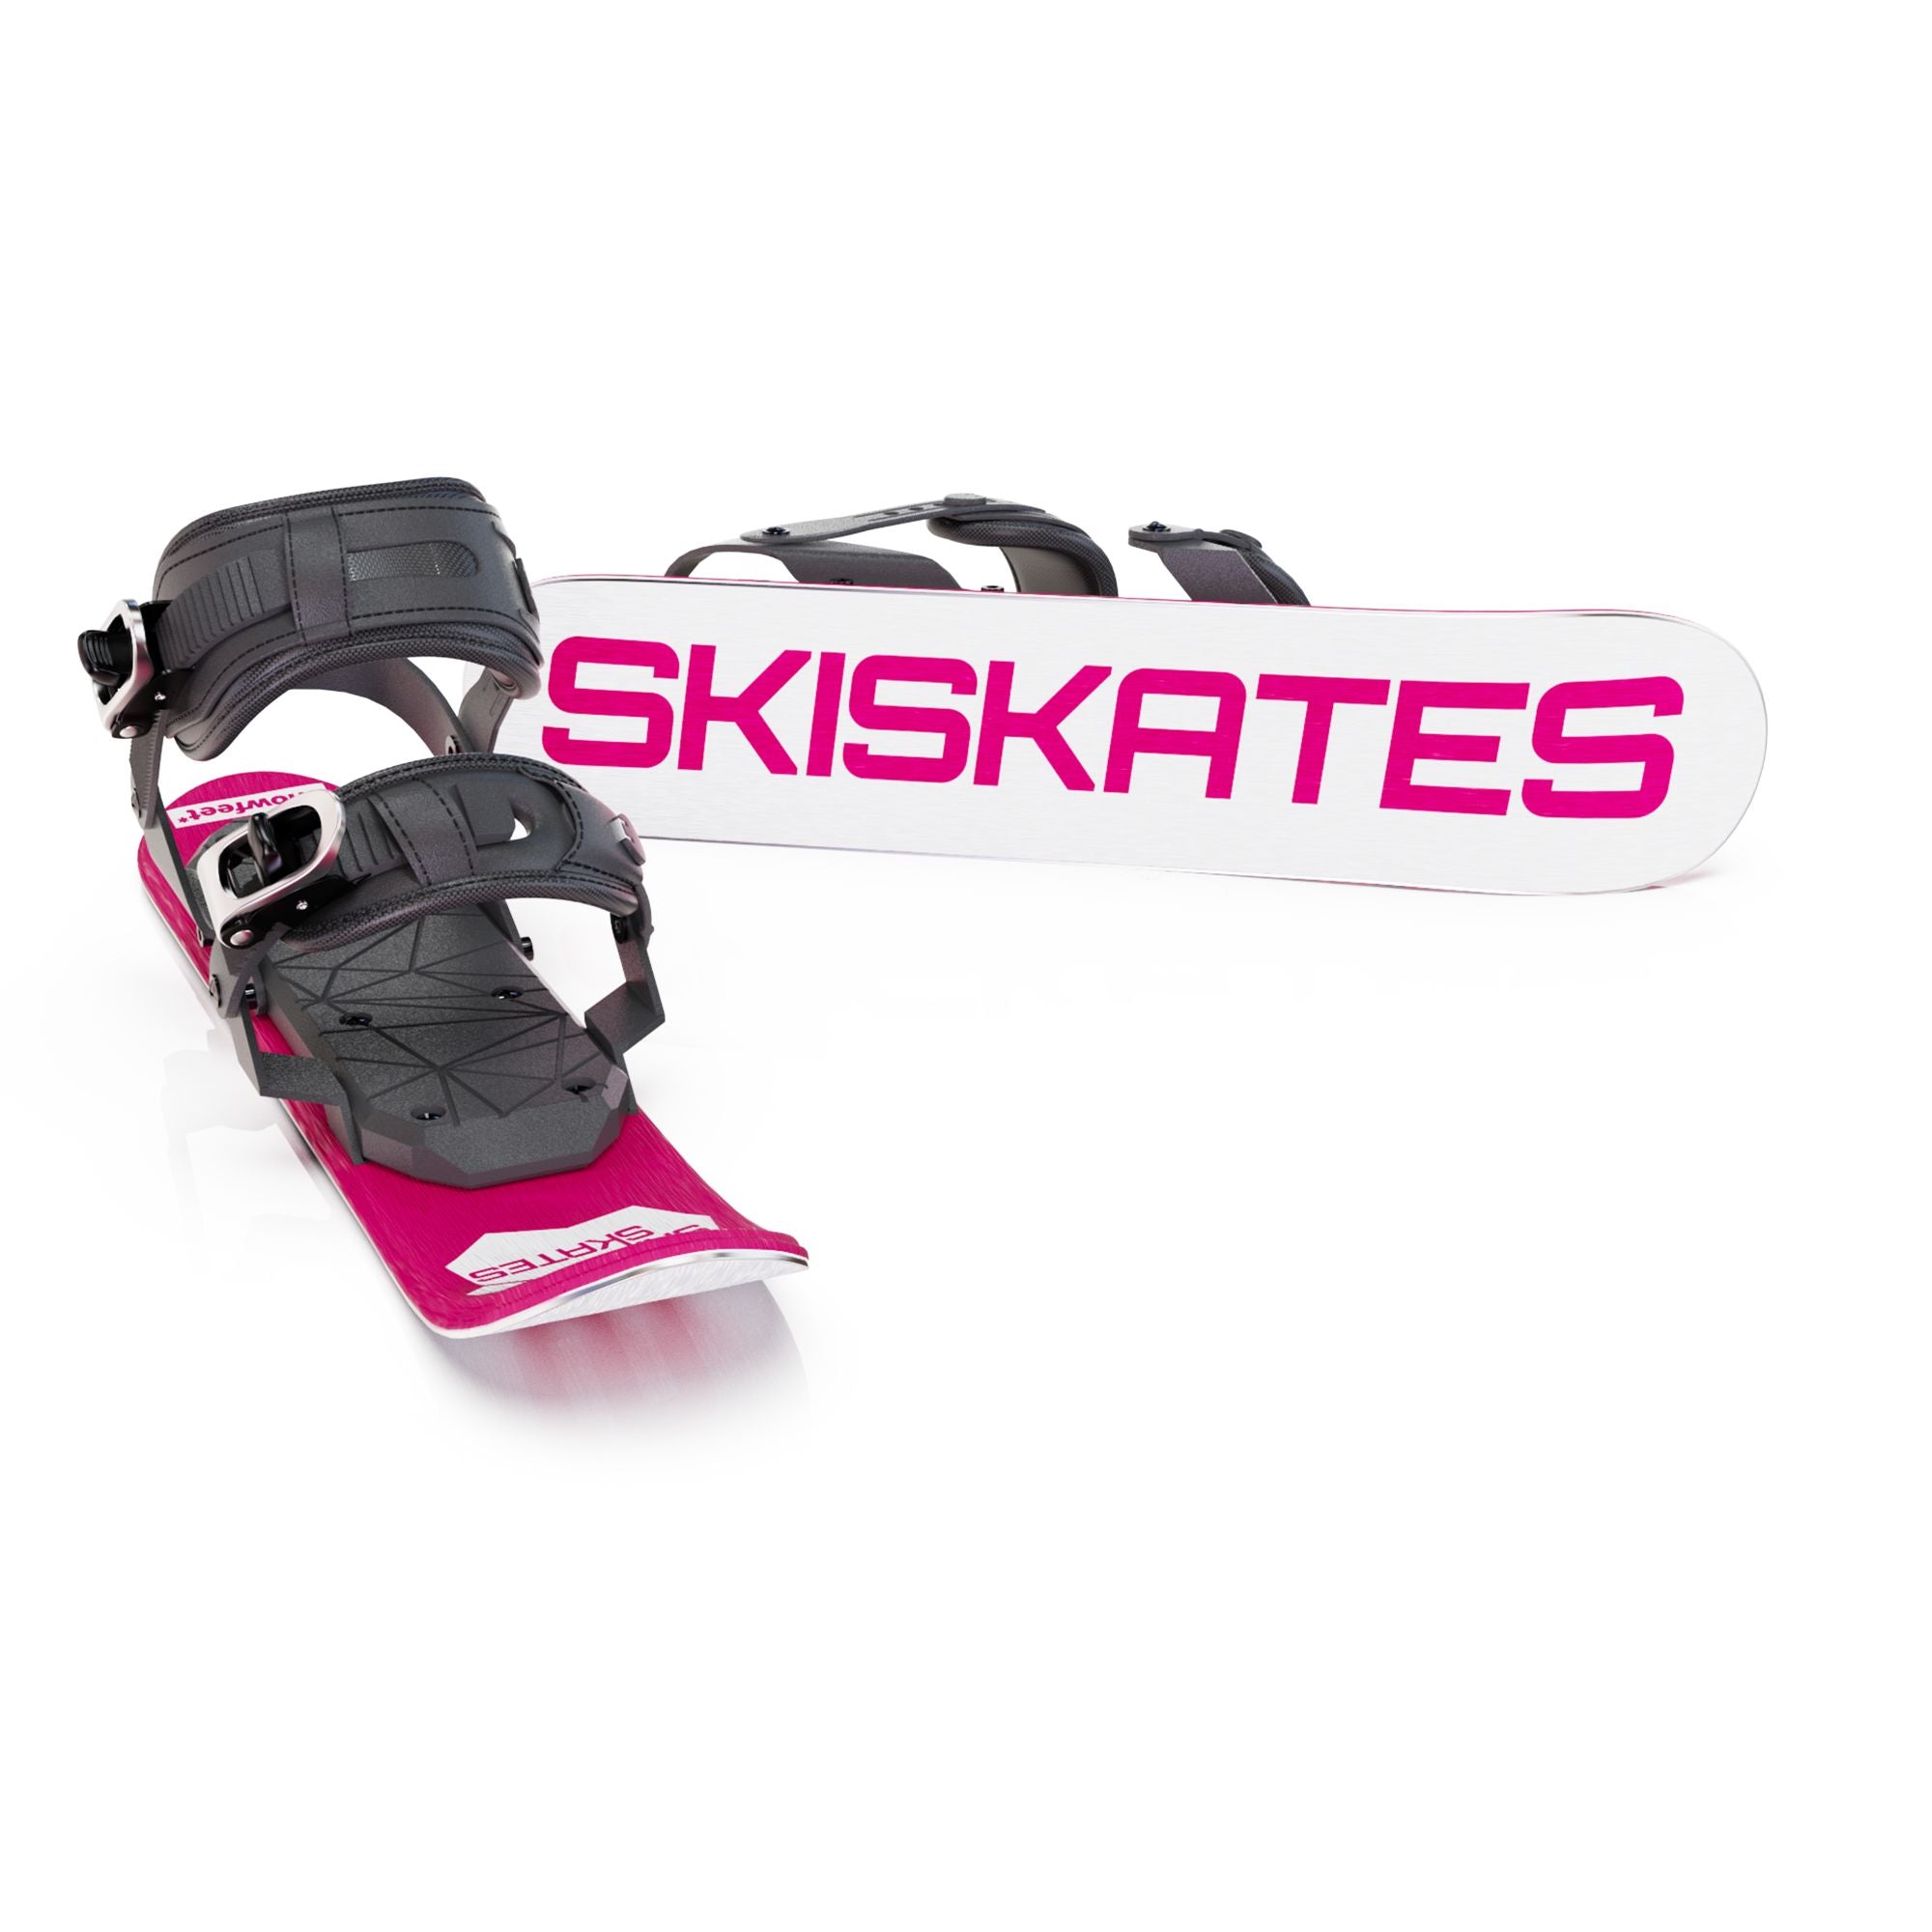 trim most Penetration Skiskates | Ski Boots Model | Short Mini Ski by Snowfeet*